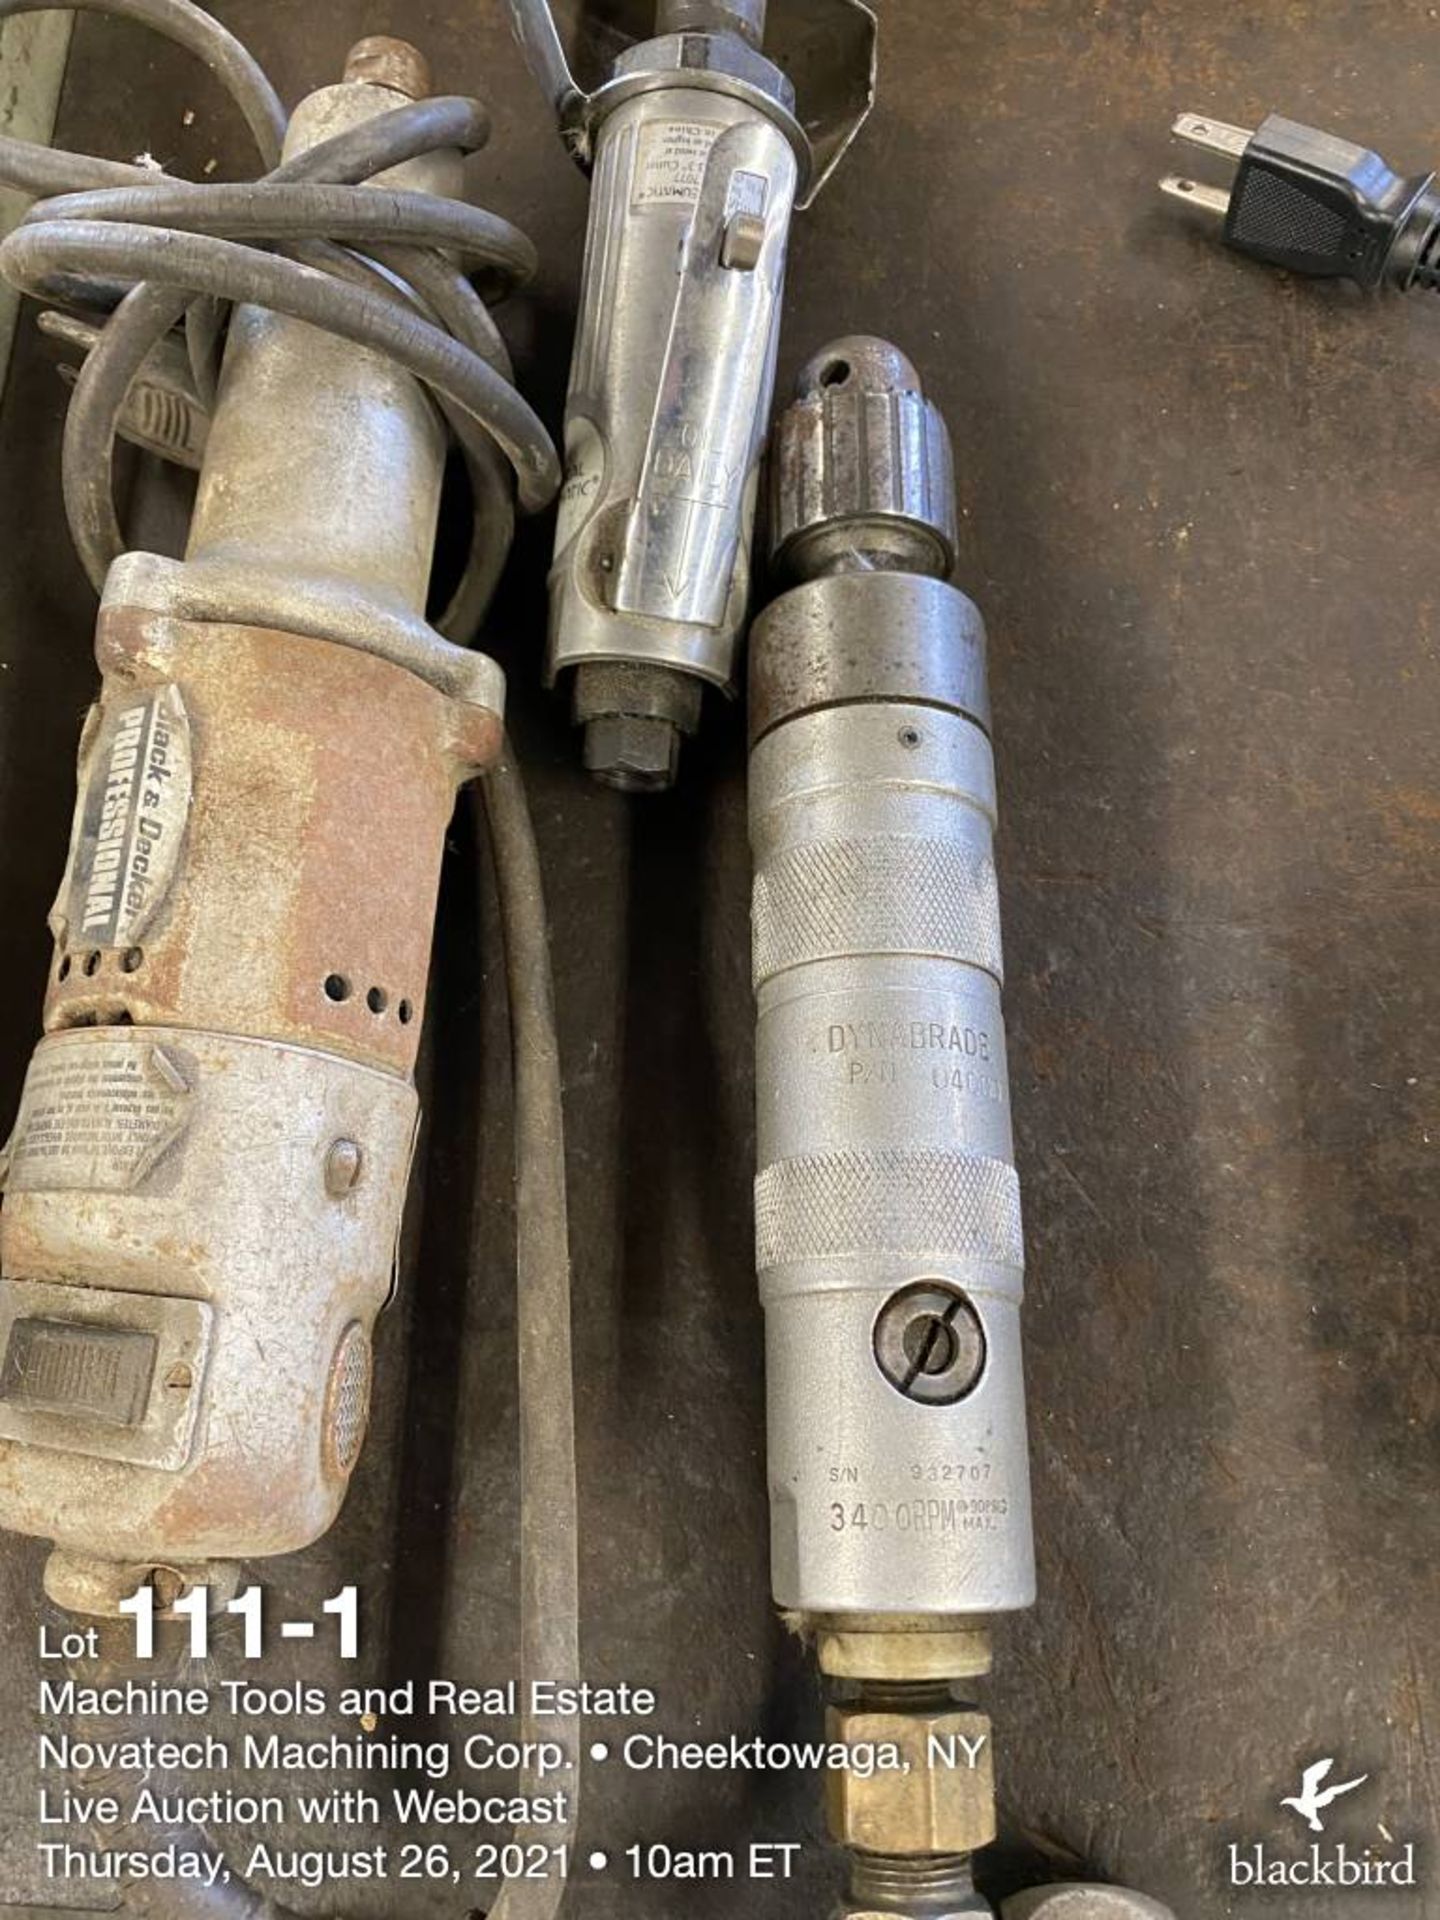 Dynabrade pneumatic drill / polisher; Black & Decker corded die grinder